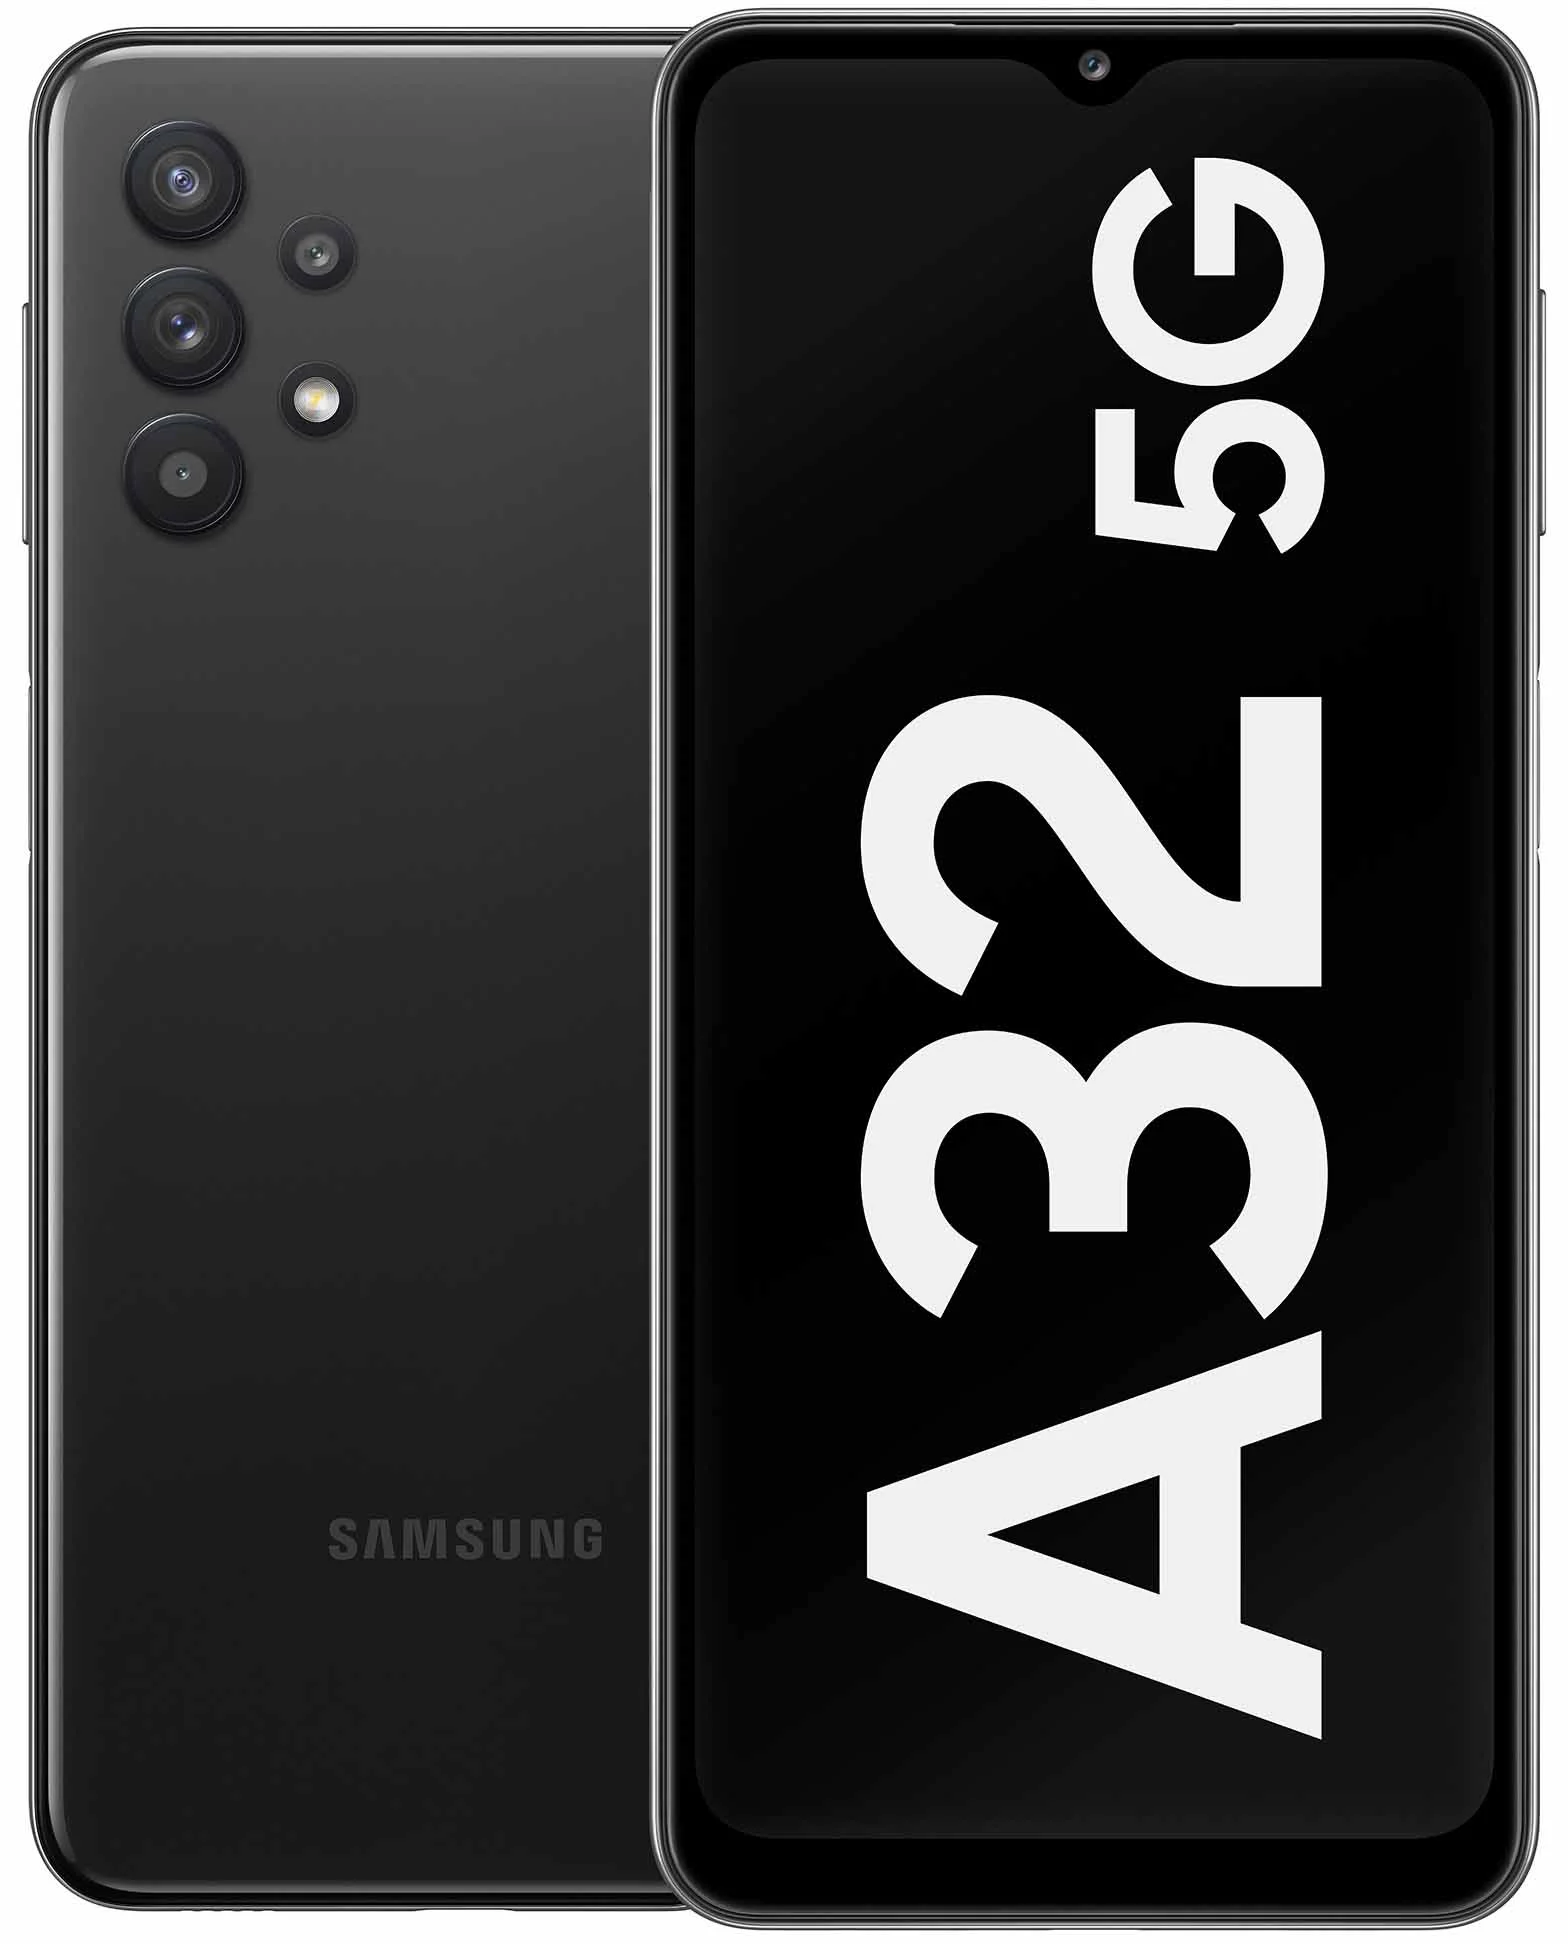 Samsung Galaxy A32 5G Price in Bangladesh - Sotophone.com